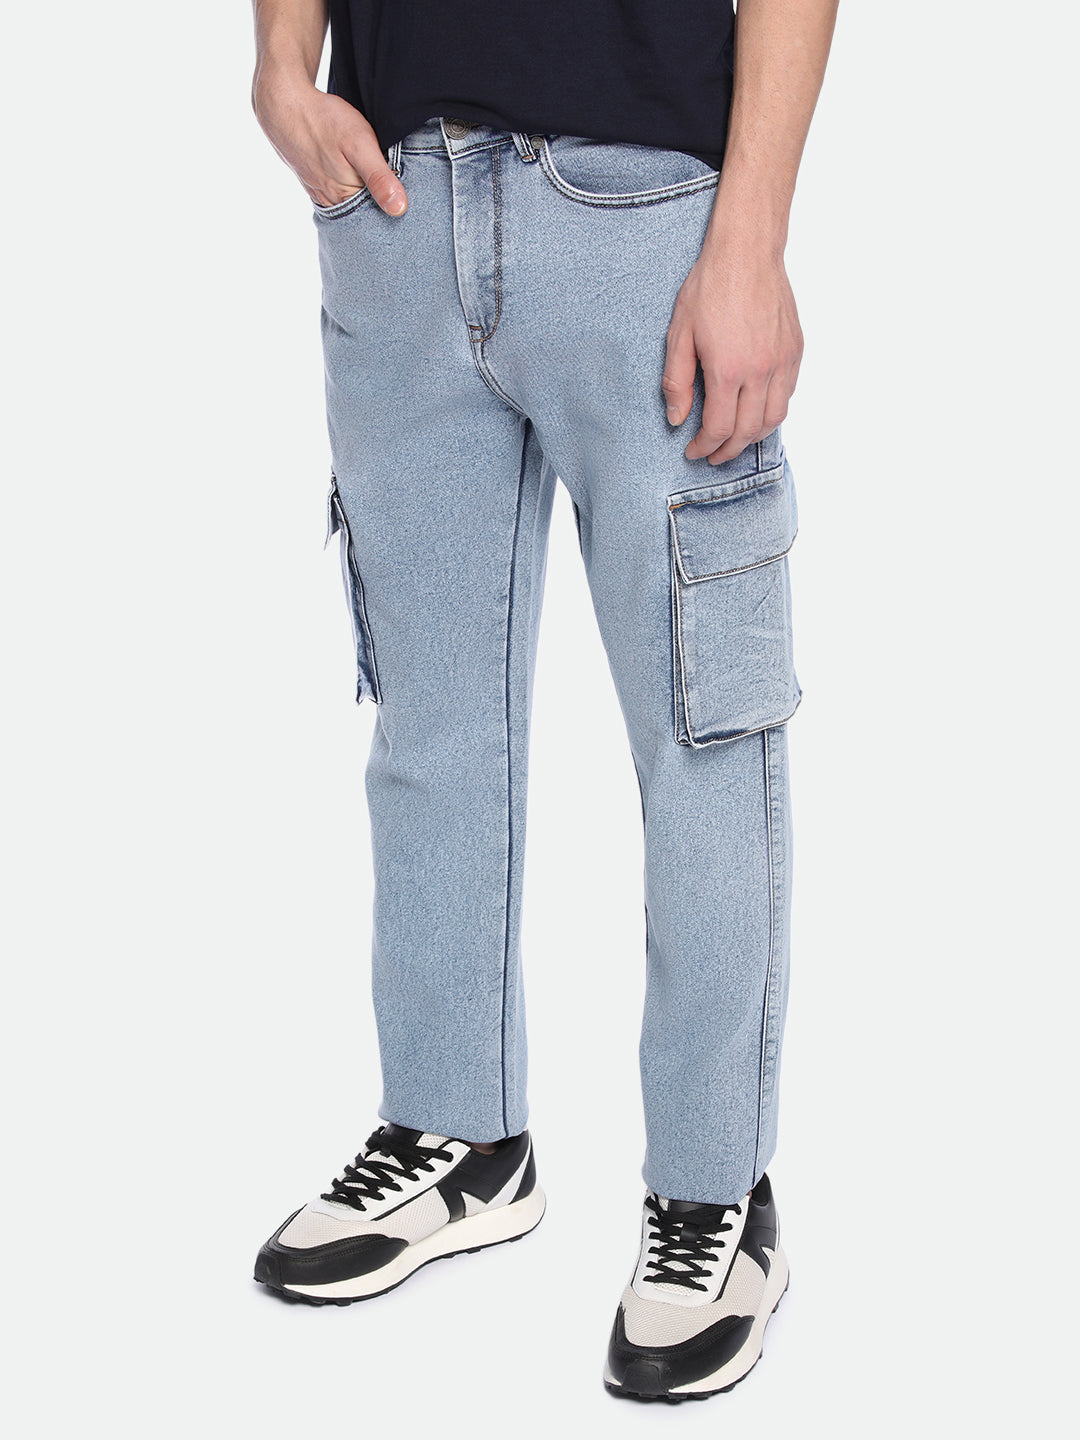 Dennis Lingo Mens's MID BLUE Washed Jeans